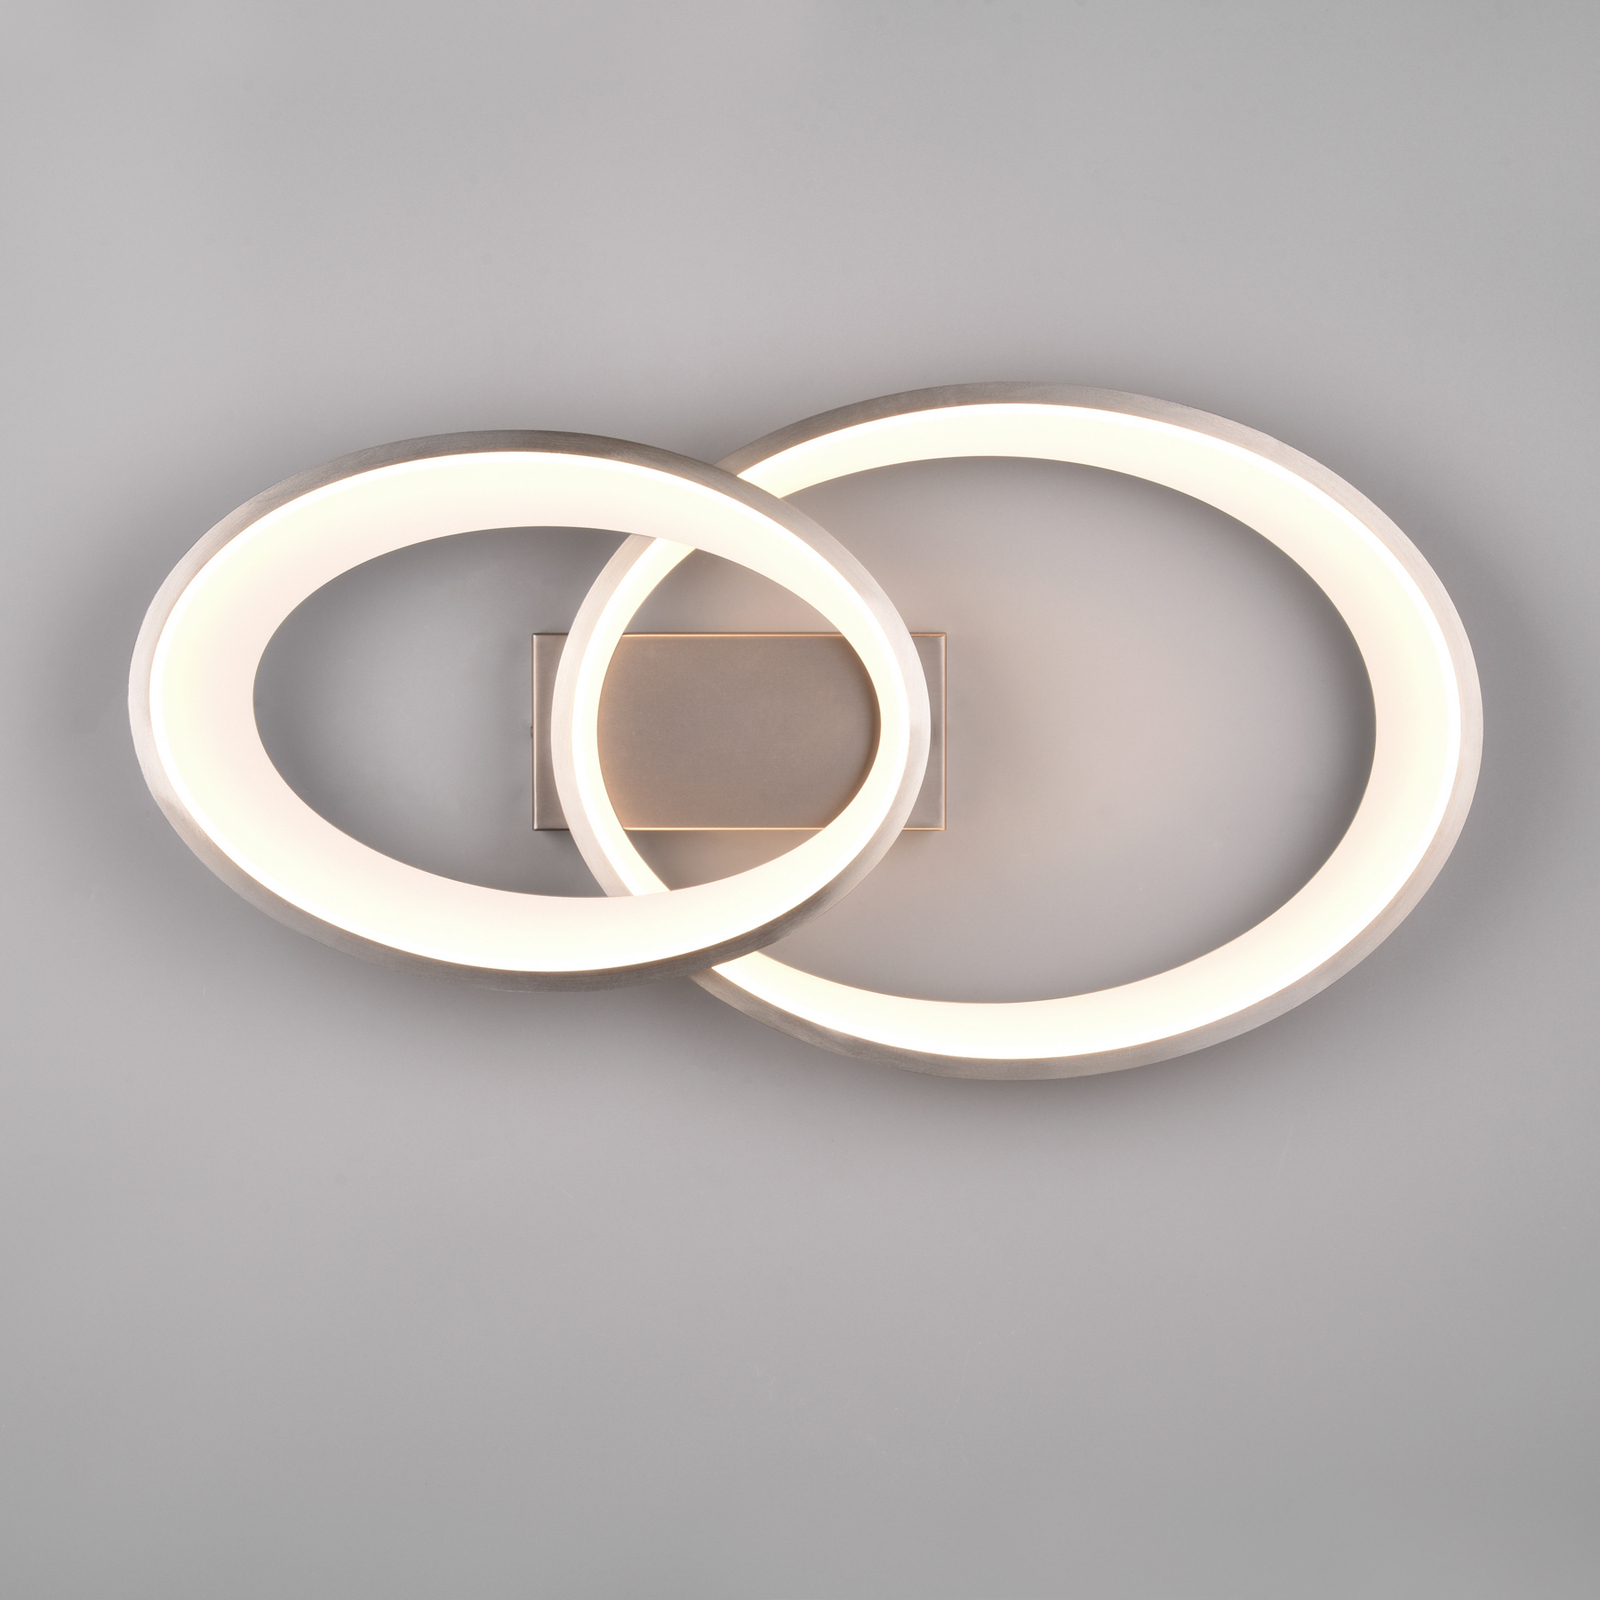 LED plafondlamp Malaga met 2 ringen, mat nikkel